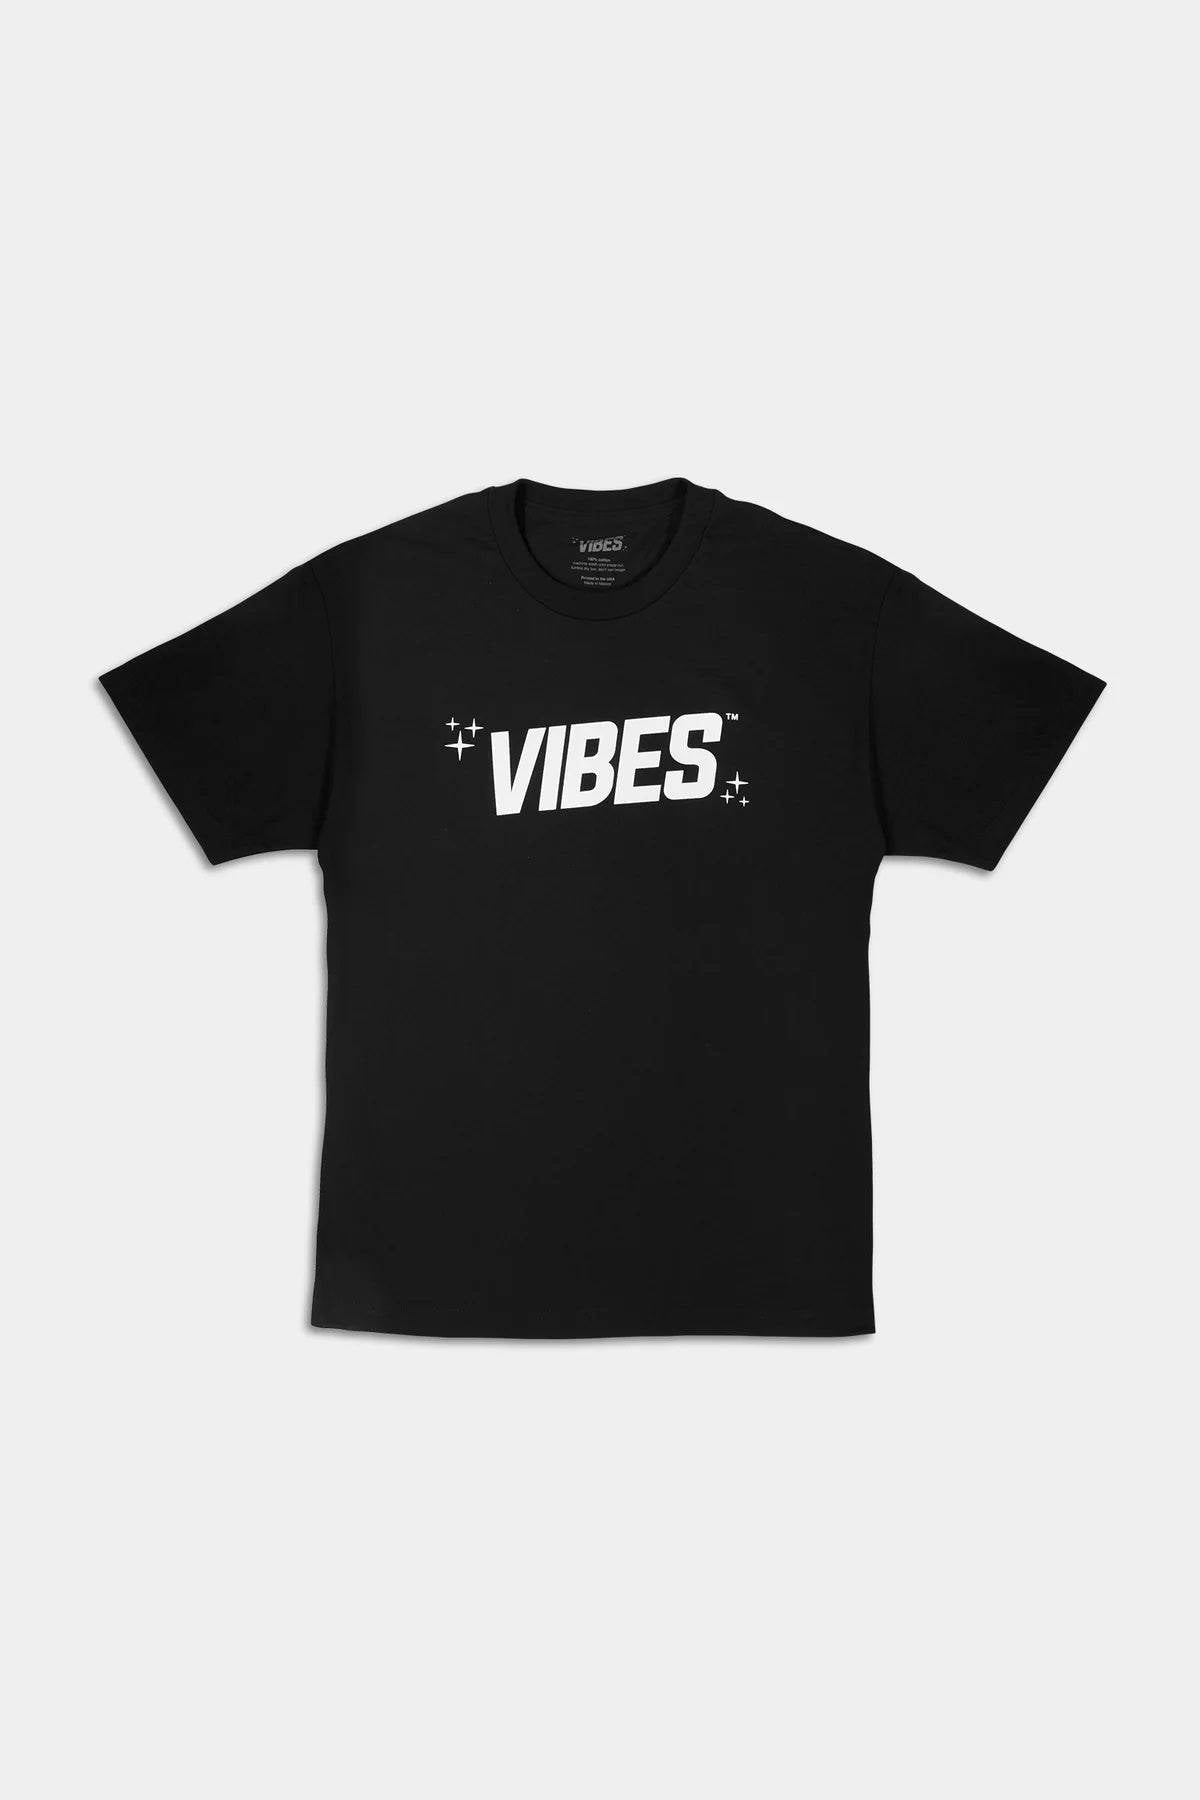 VIBES Black With White Logo T-Shirt Medium